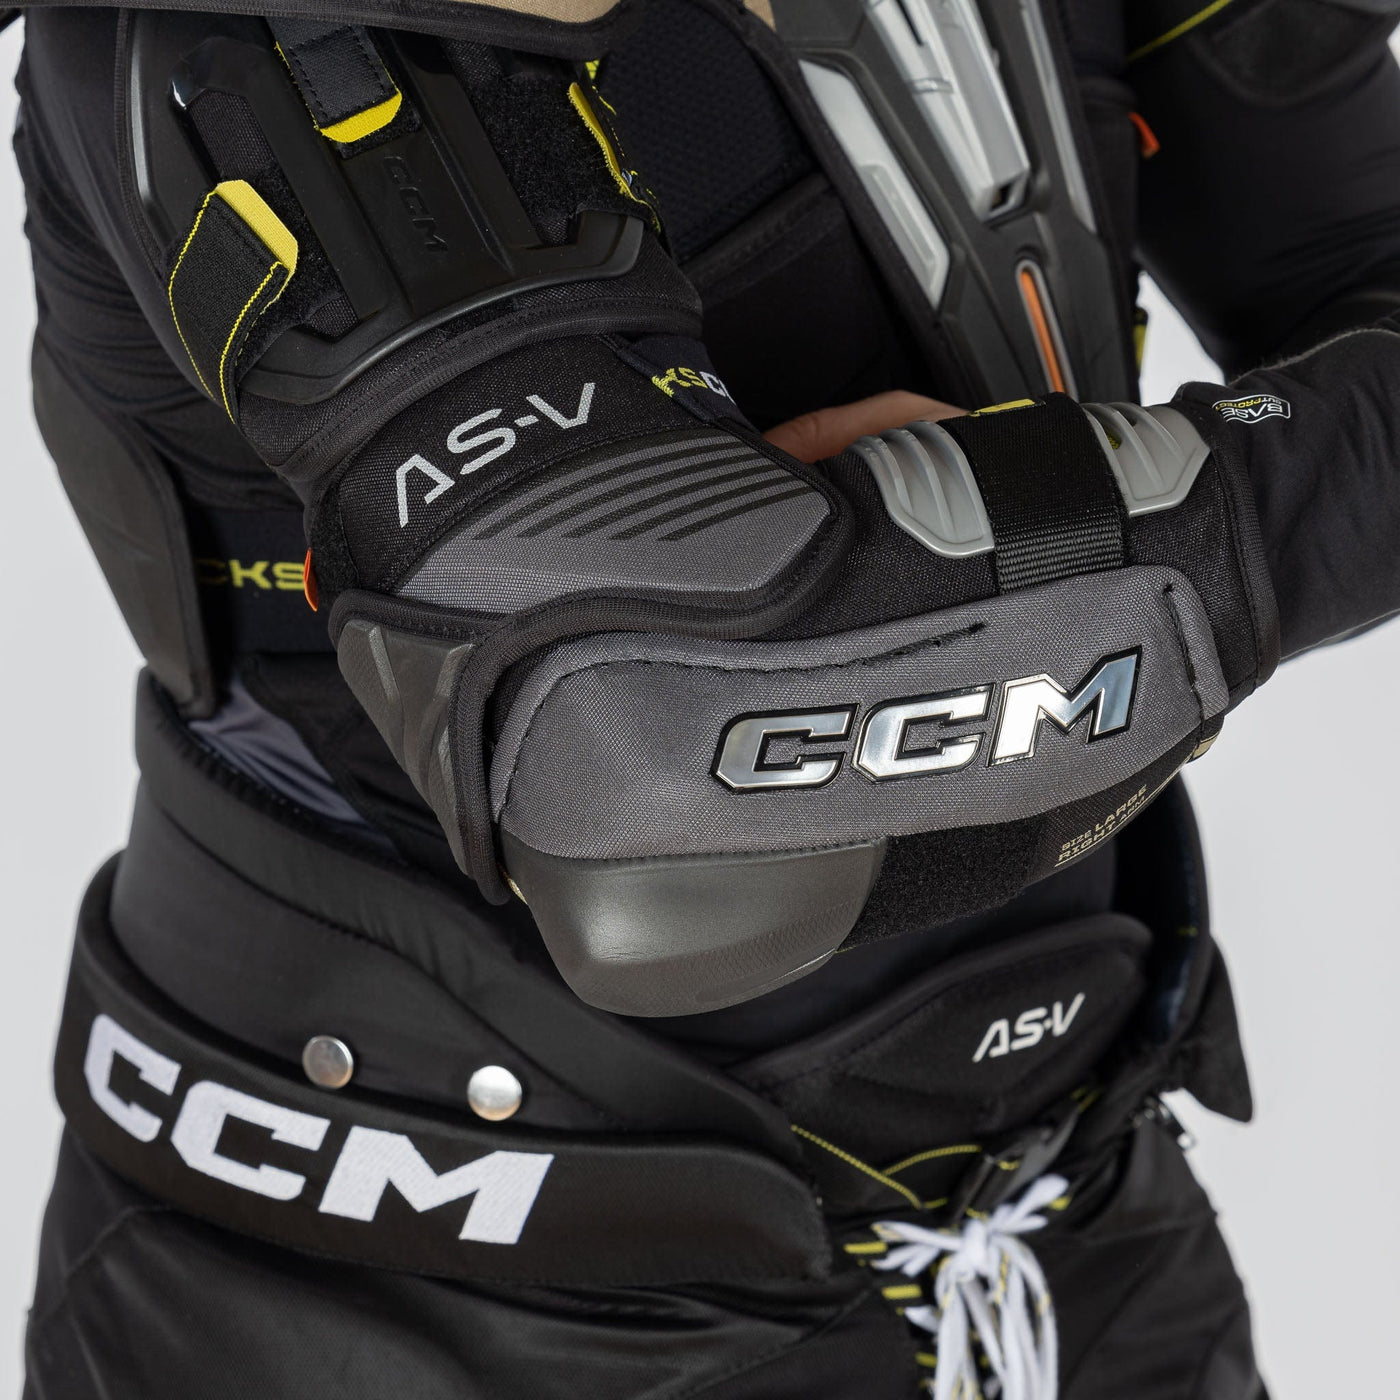 CCM Tacks AS-V Senior Hockey Elbow Pads - The Hockey Shop Source For Sports